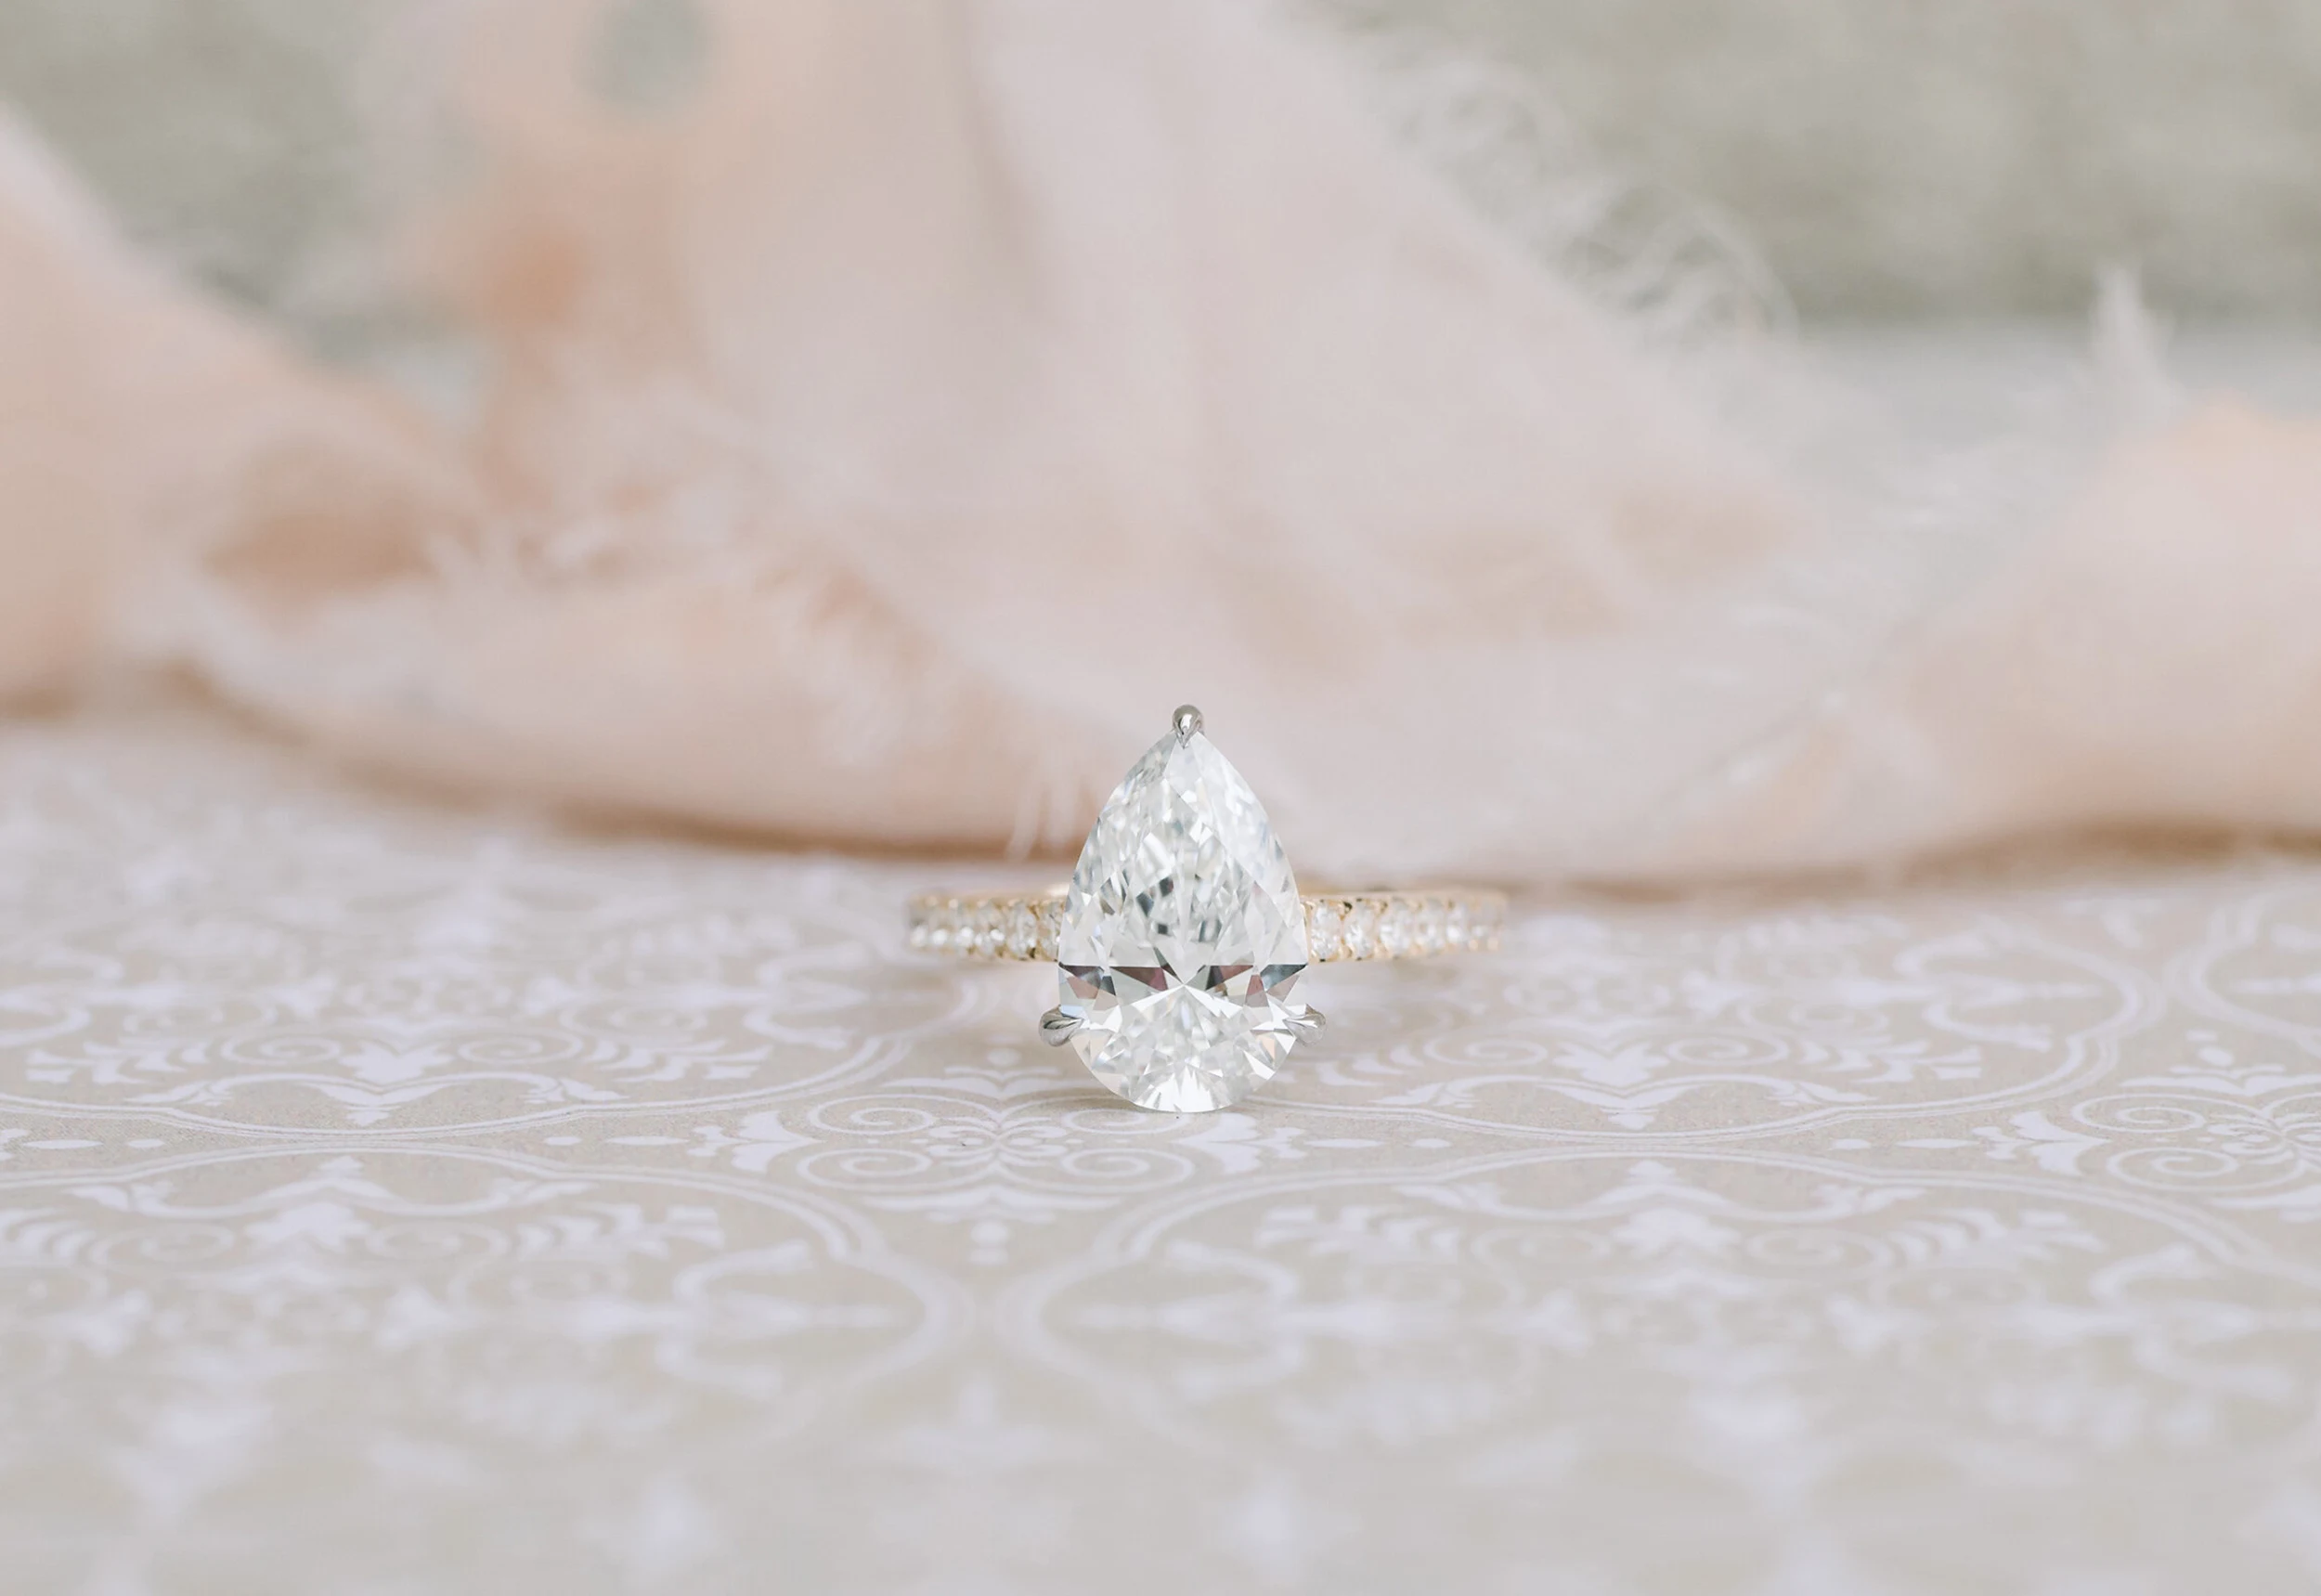 Custom Pear Diamond Engagement Ring | Miss Diamond Ring